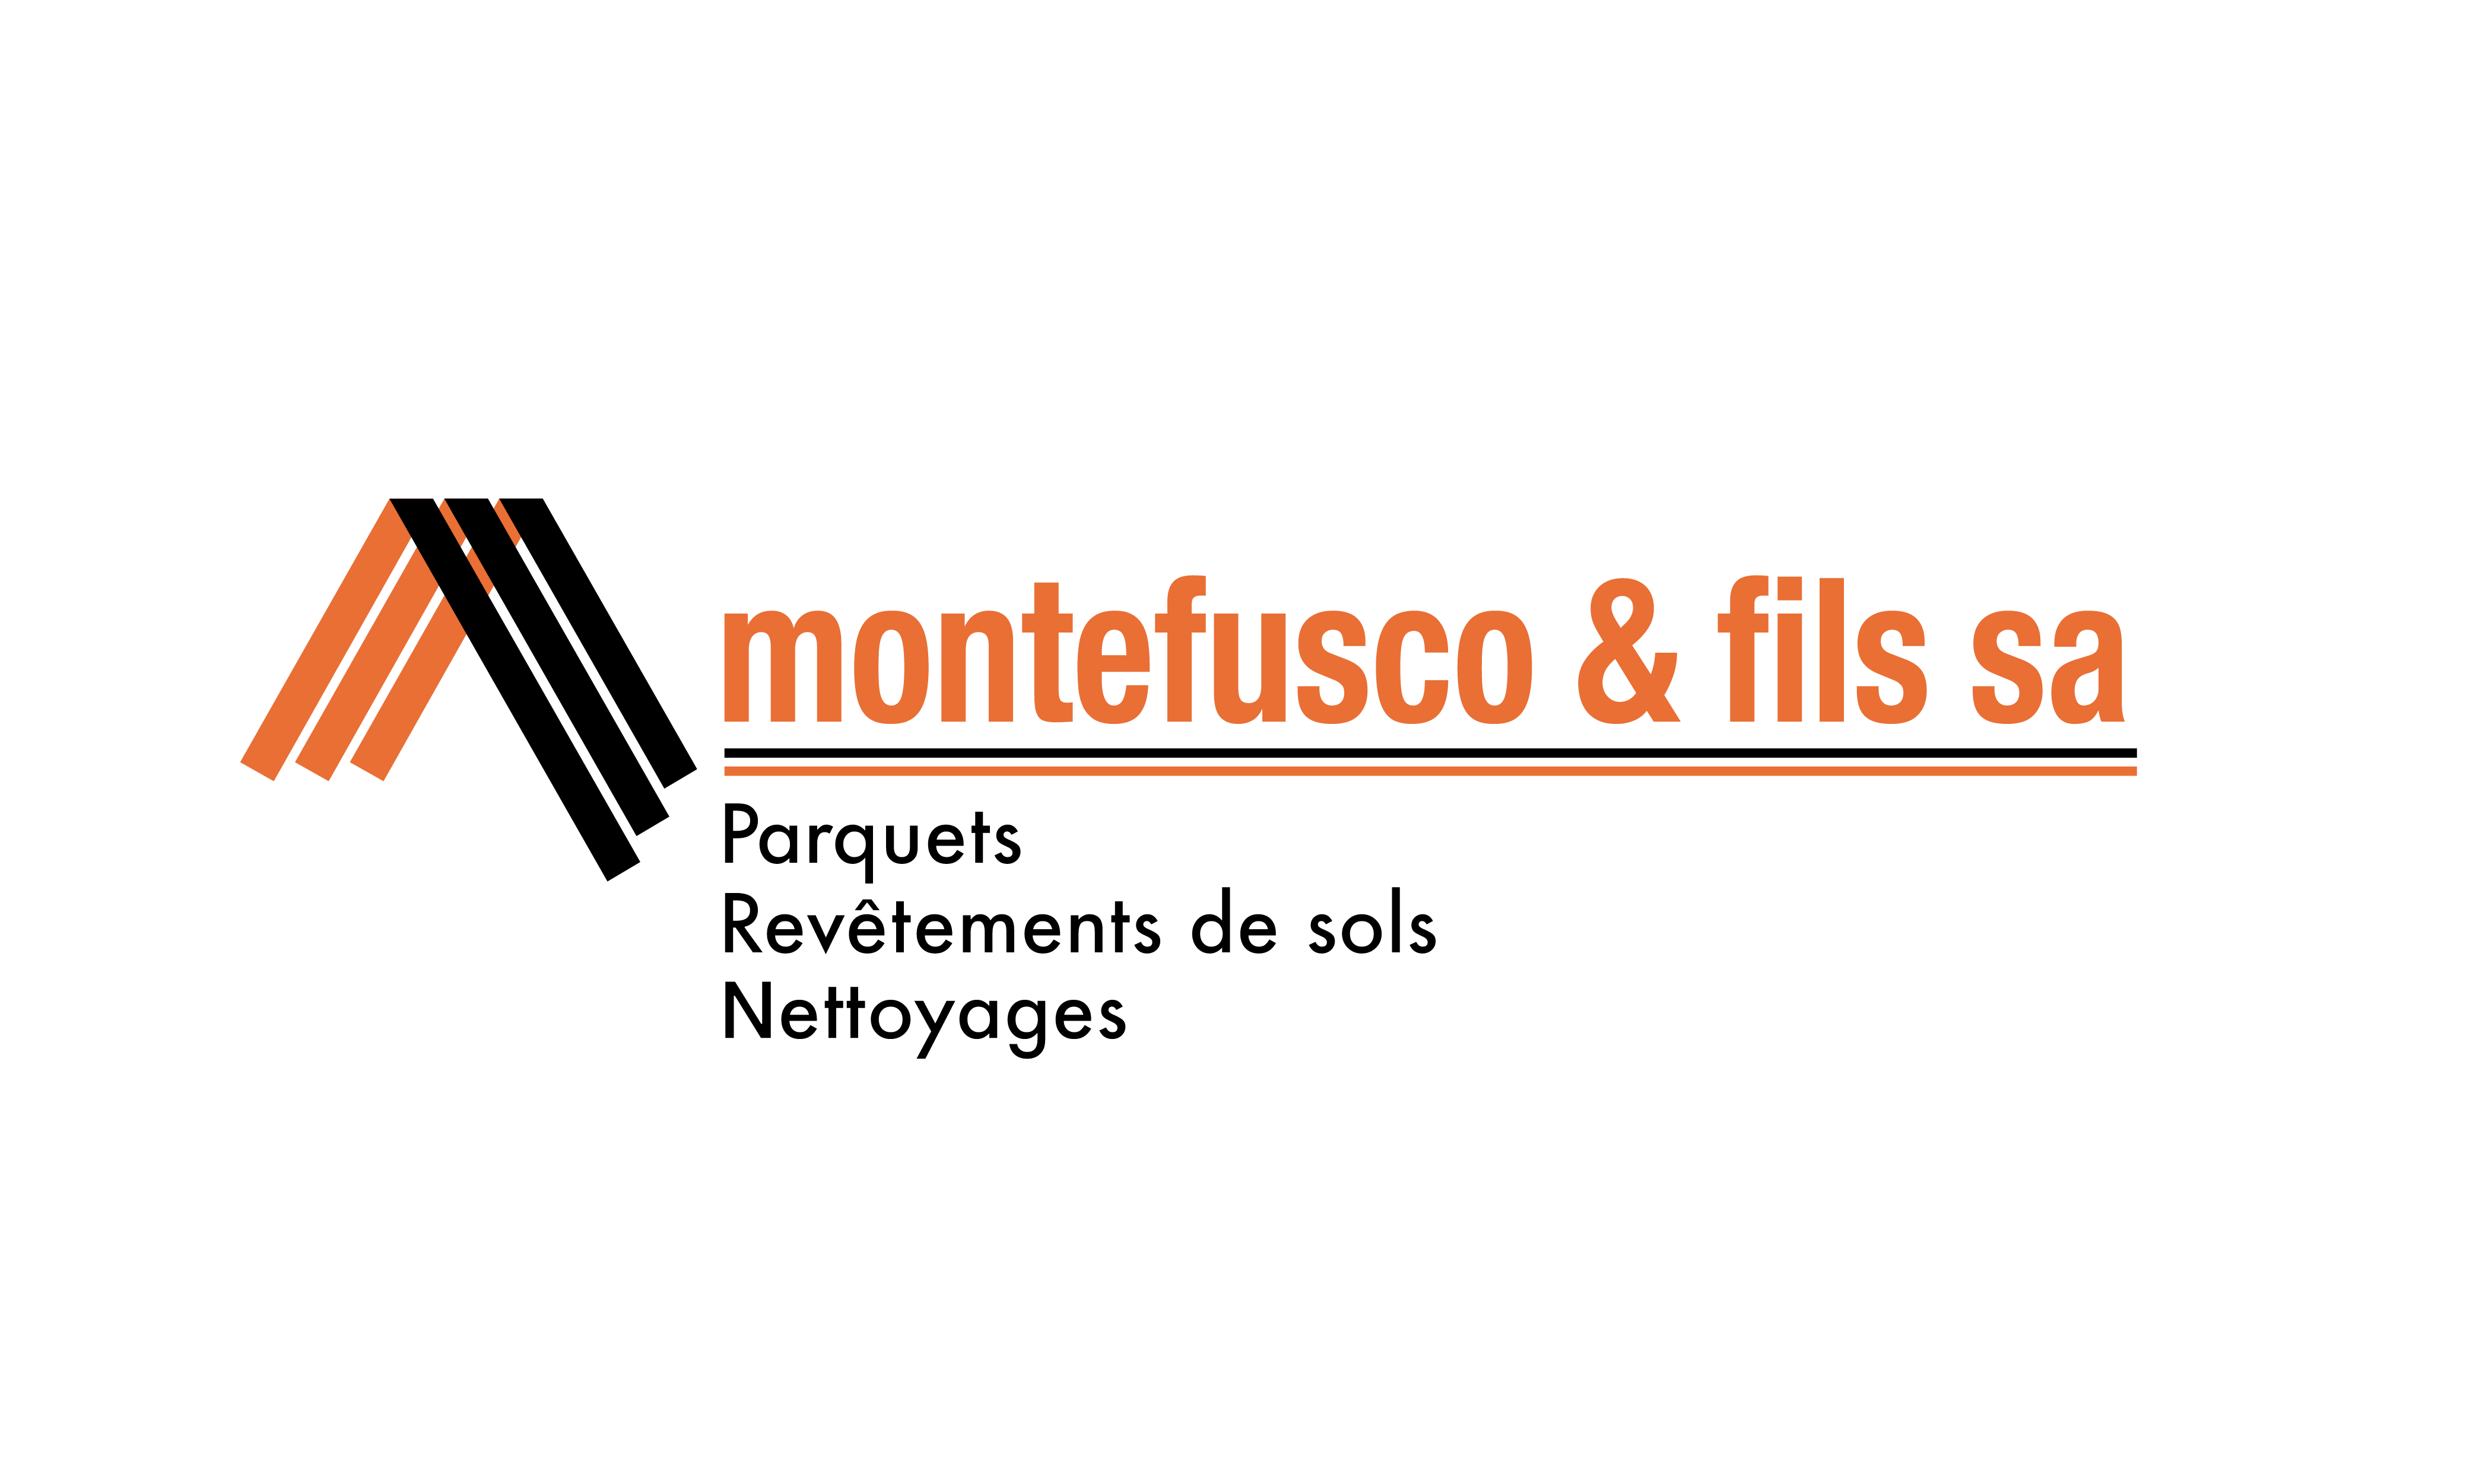 Montefusco